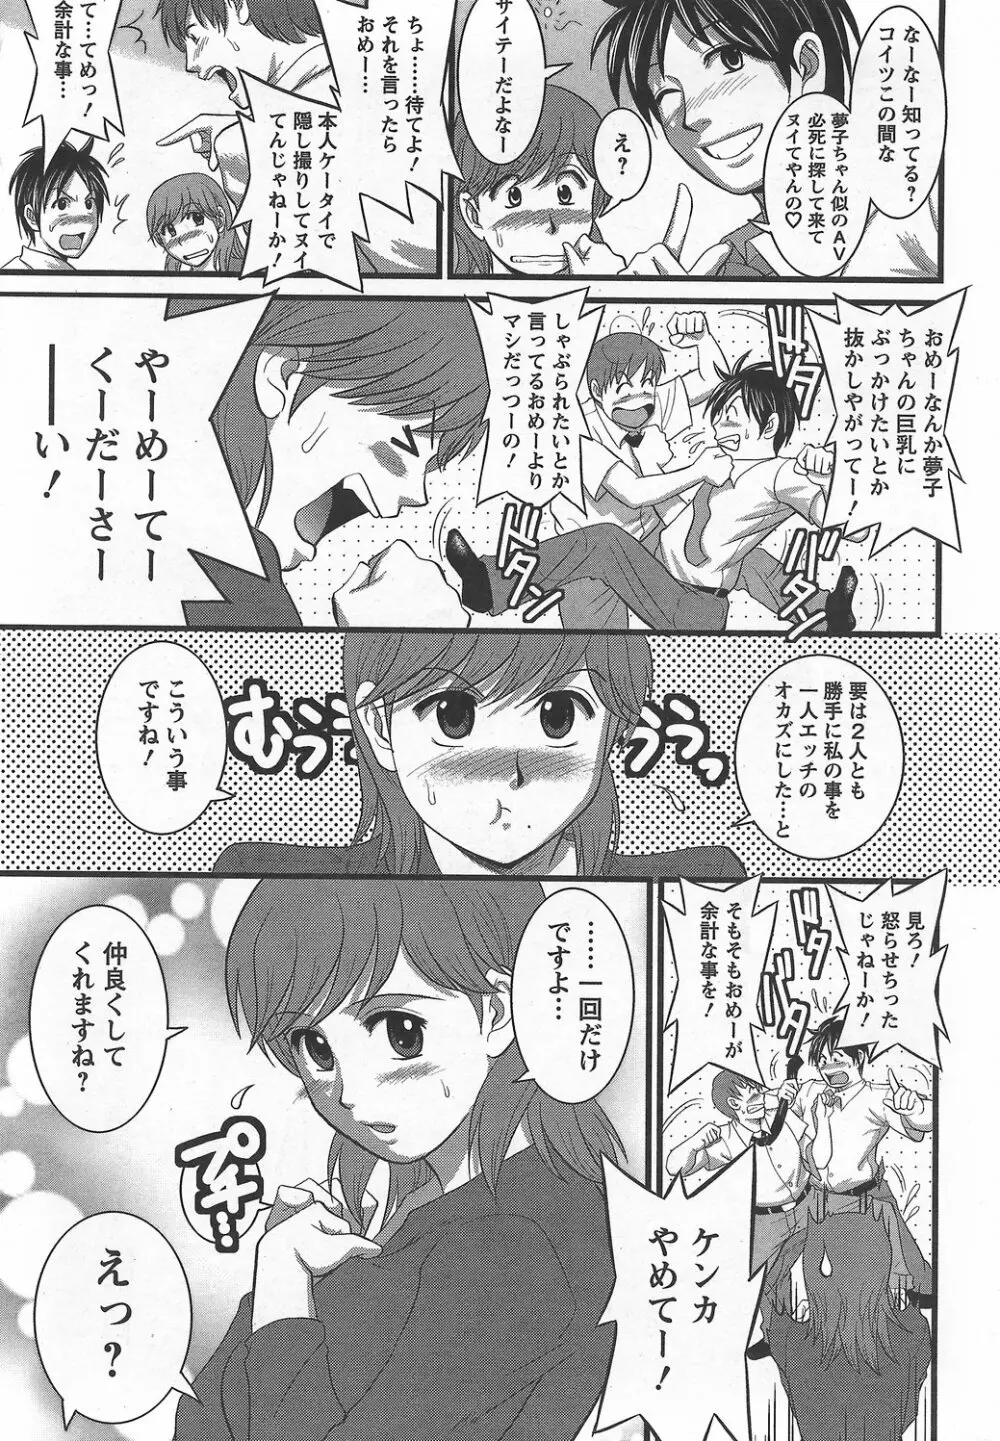 Haken no Muuko-san 6 12ページ